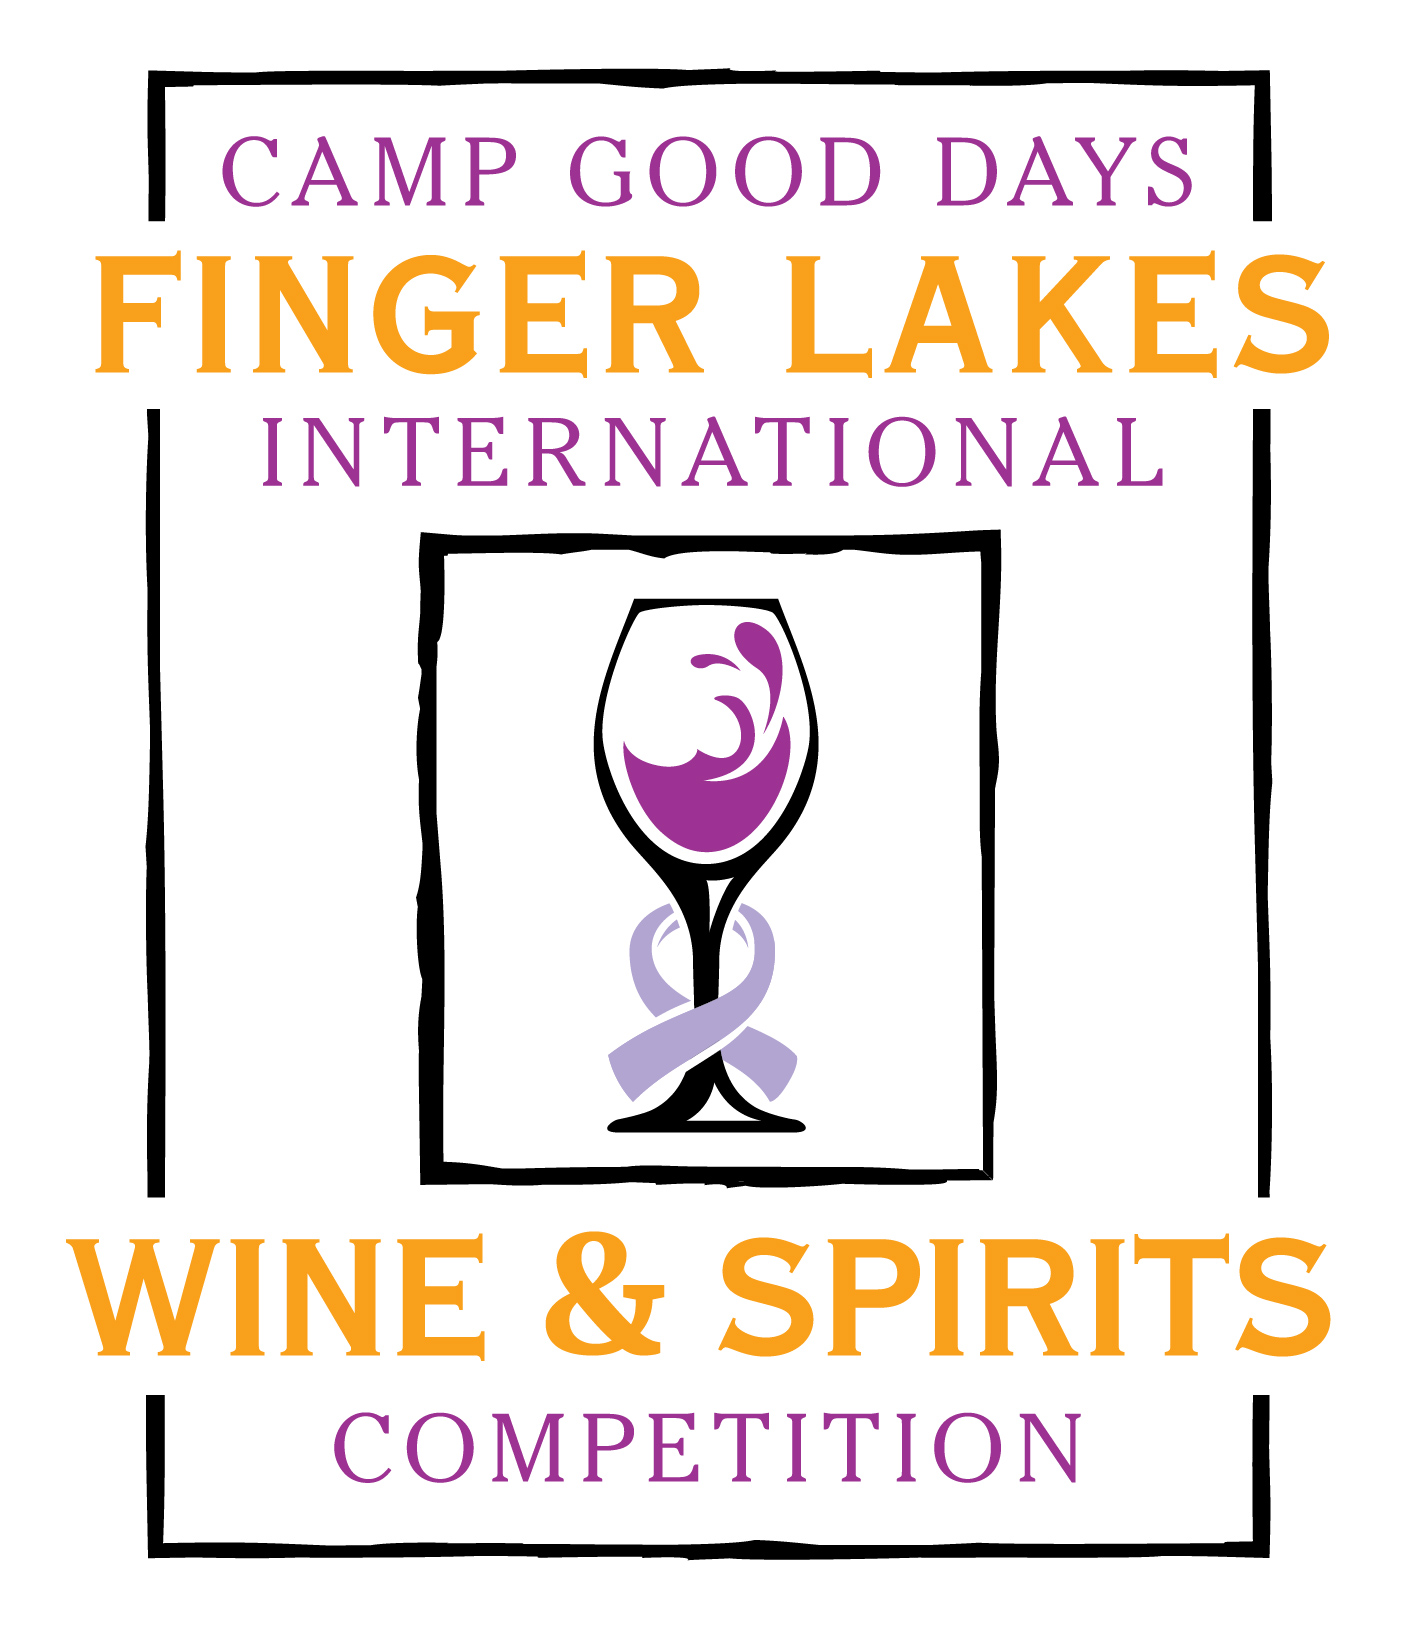 Camp Good Days Finger Lakes International Wine & Spirits Competition logo